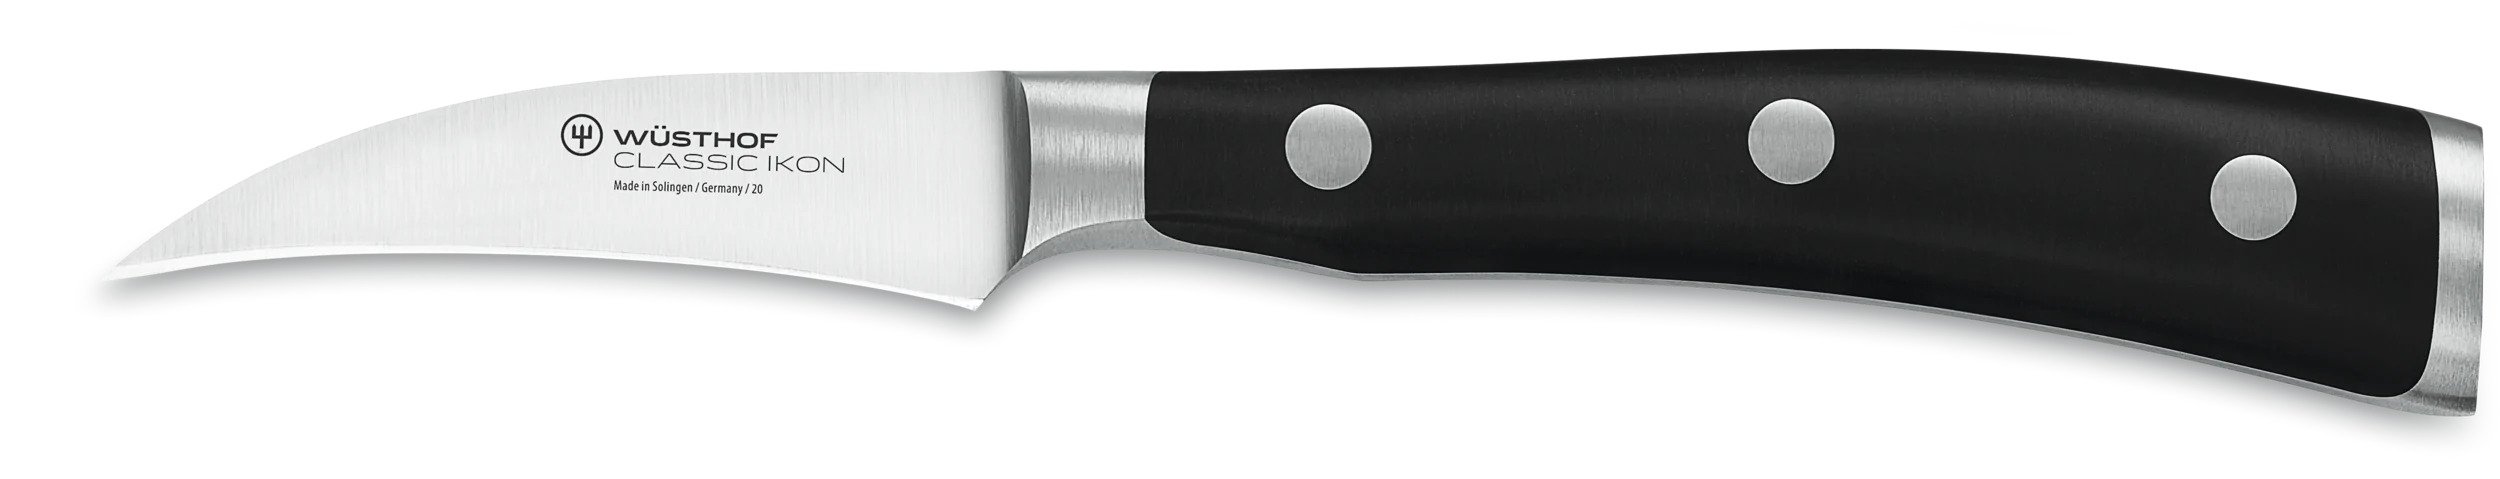 picture of a Wusthof German brand peeling knife